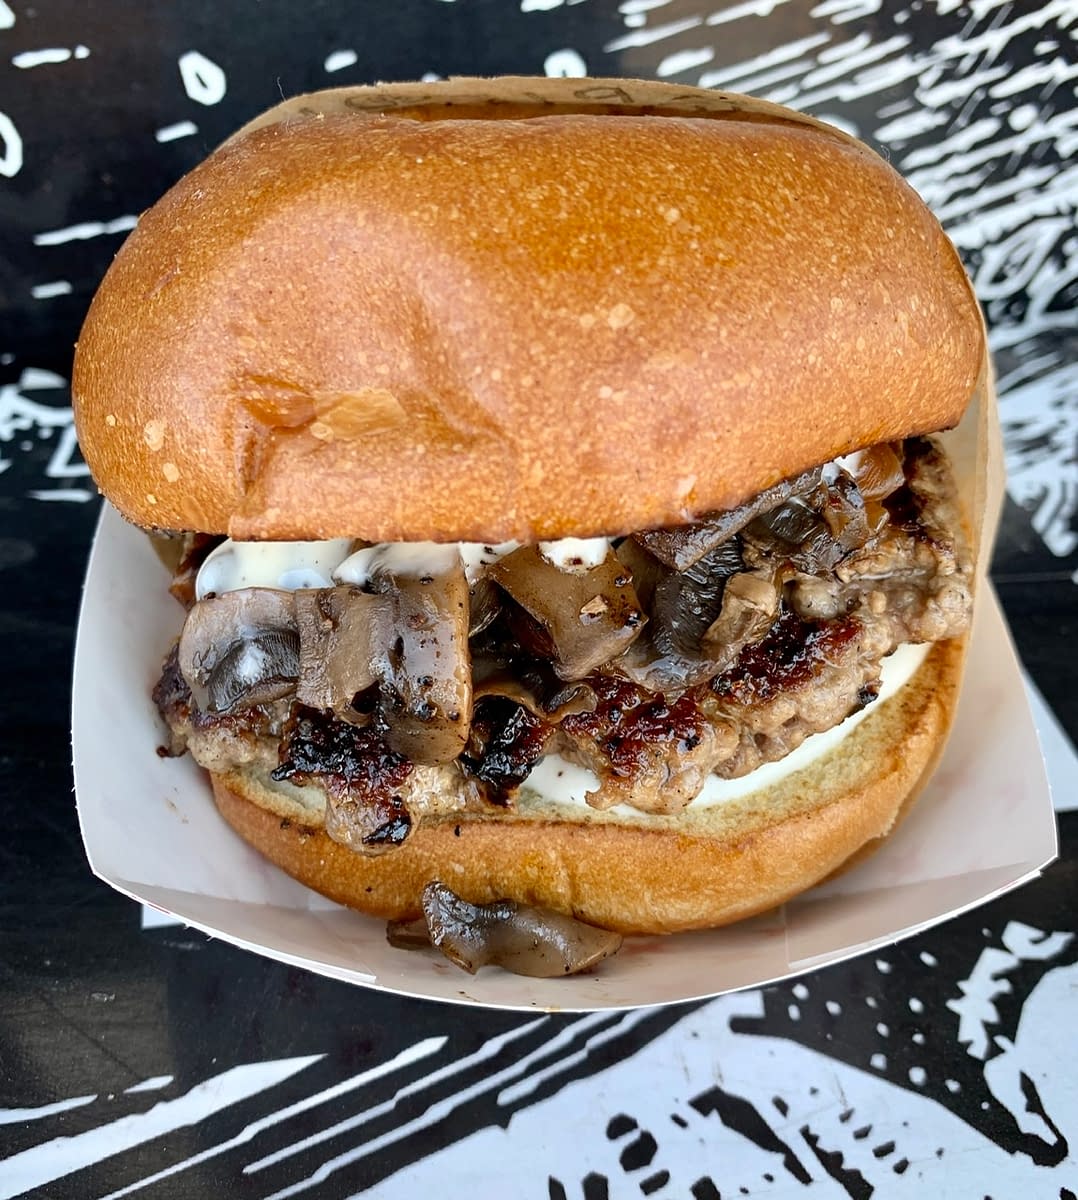 The mushroom burger from Capitol Burger.  My favorite travel food of 2020